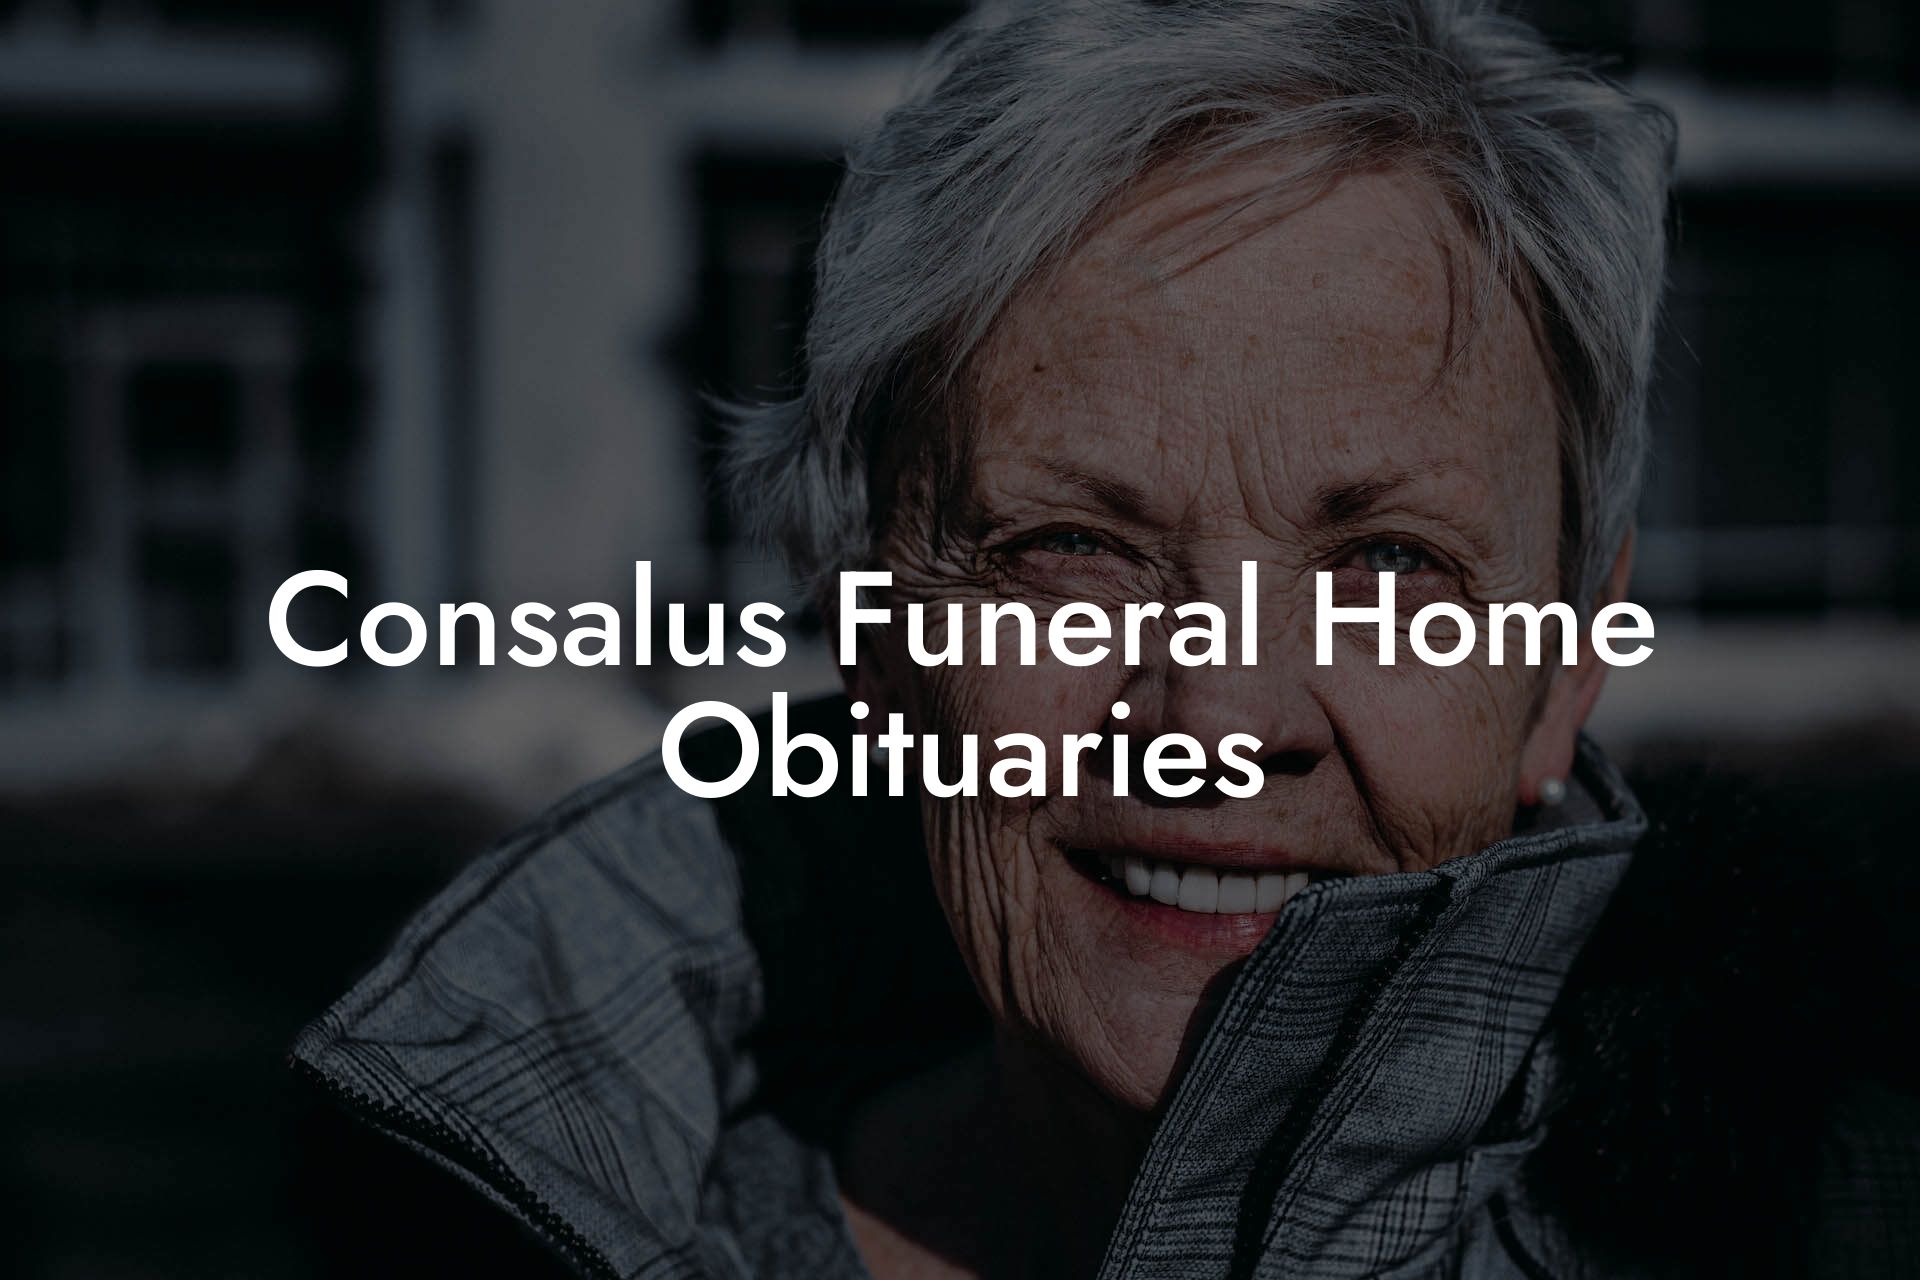 Consalus Funeral Home Obituaries